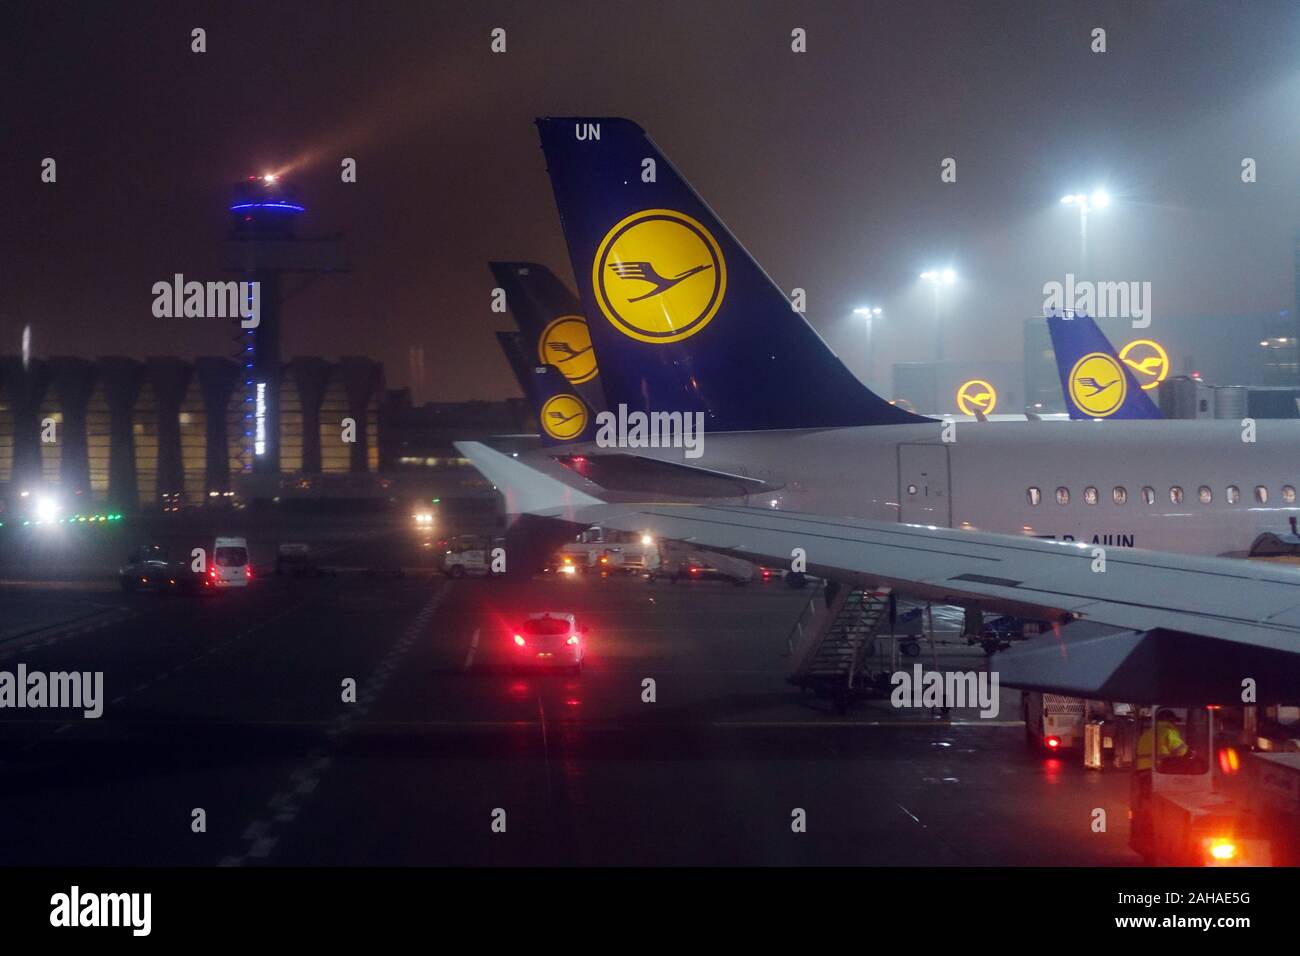 05.12.2016, Frankfurt am Main, Hessen, Germany - Lufthansa planes at night at Frankfurt Airport. 00S161205D051CAROEX.JPG [MODEL RELEASE: NO, PROPERTY Stock Photo